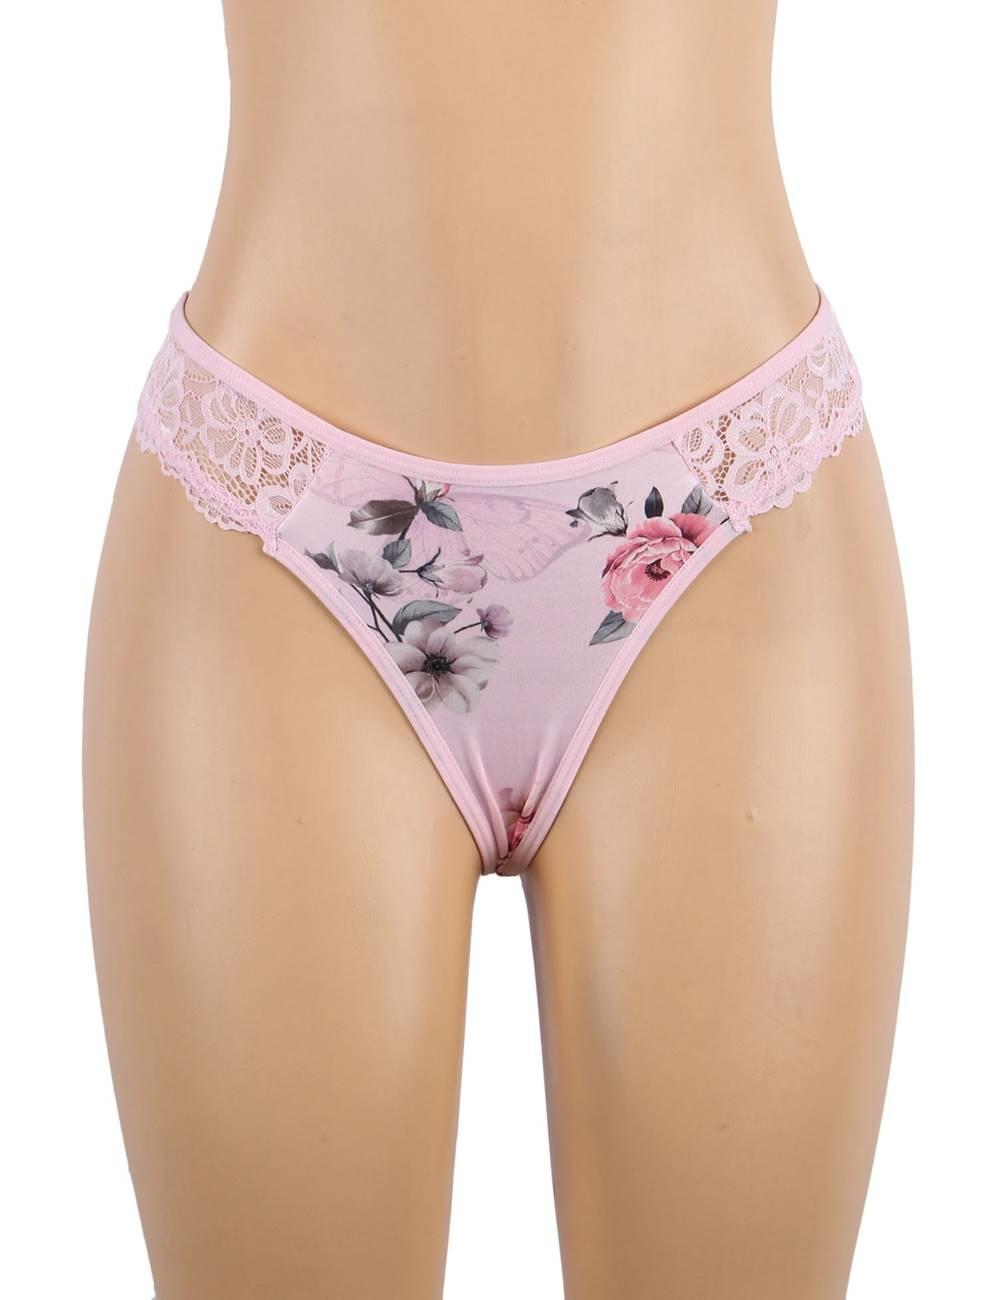 Pink Floral Print Babydoll Set matching panty